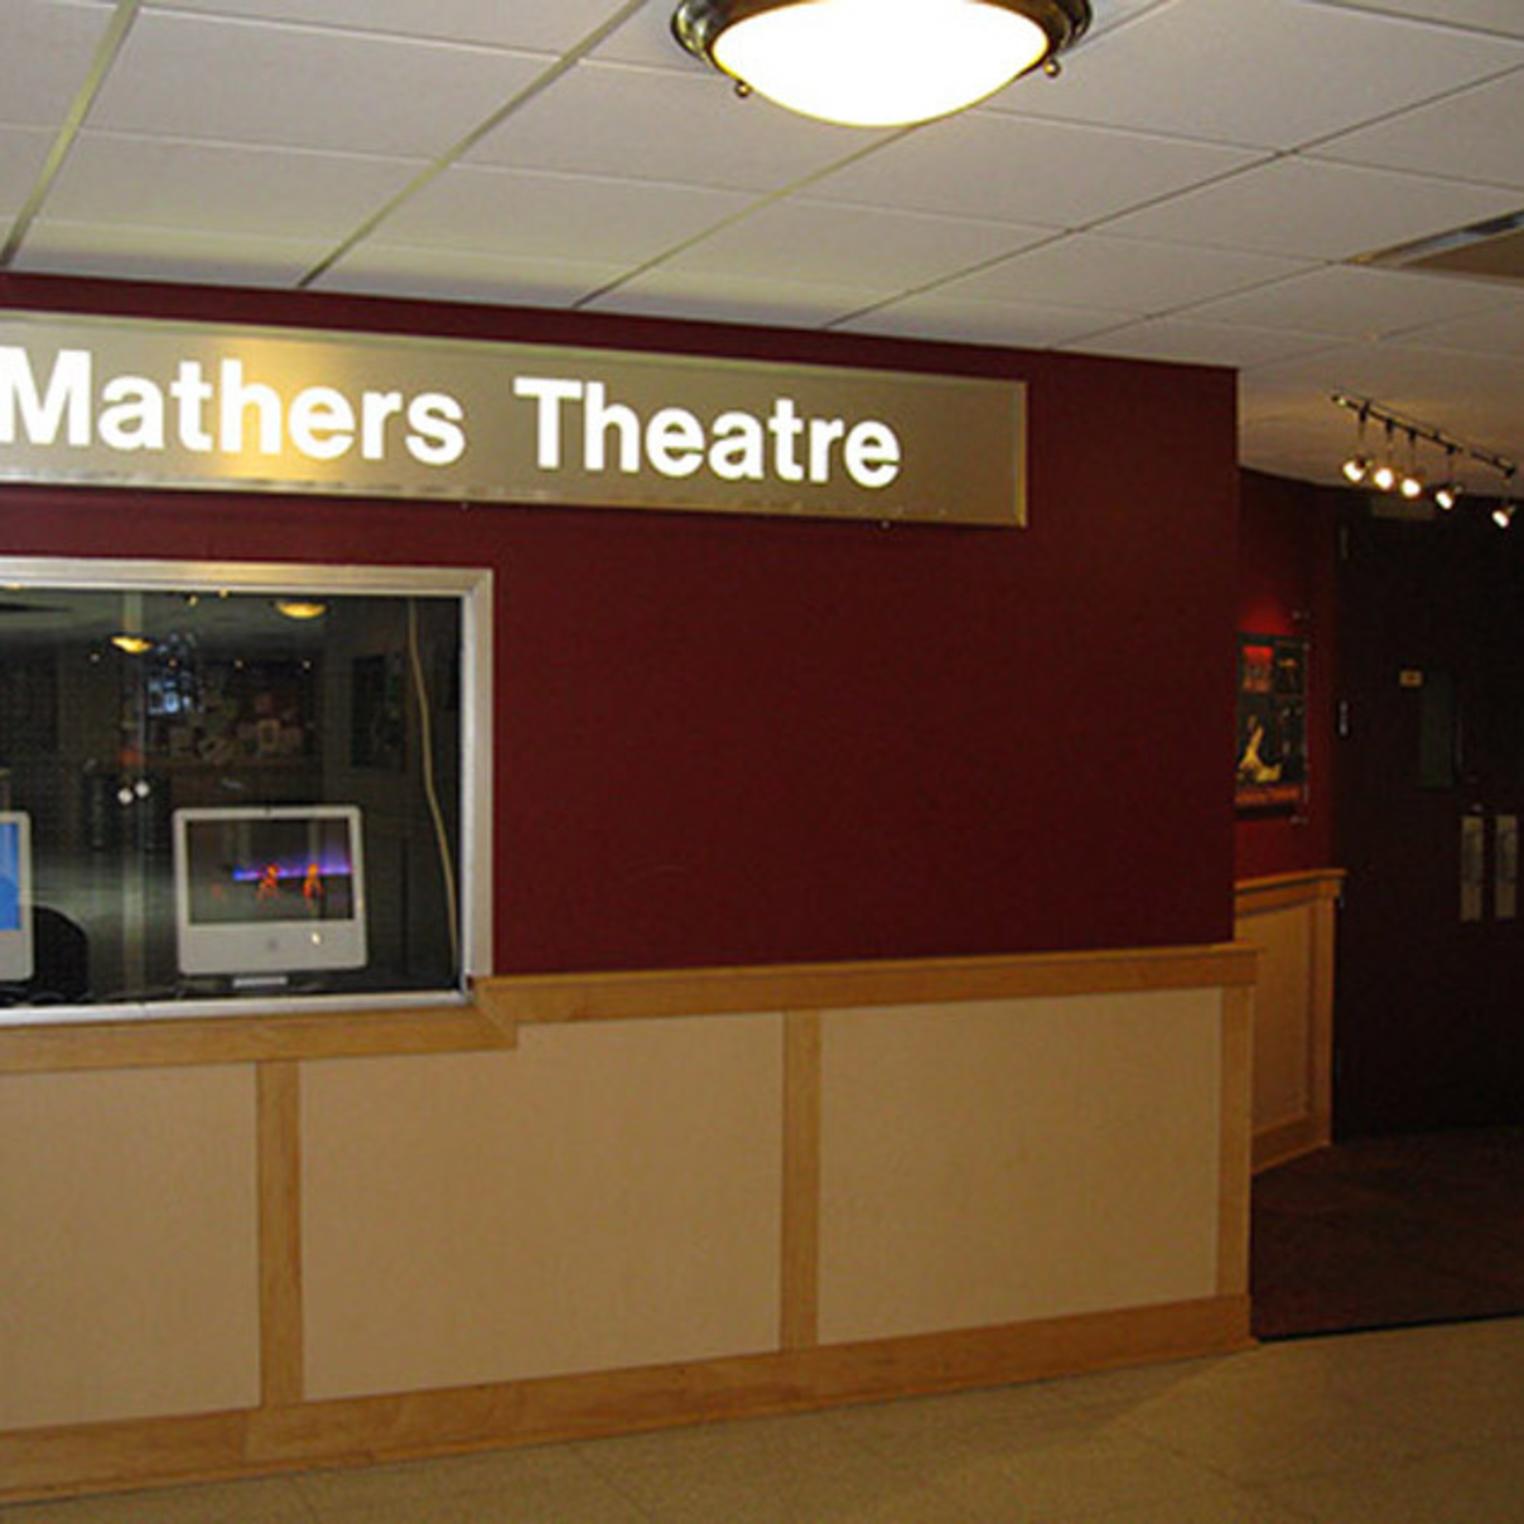 Mathers Theatre